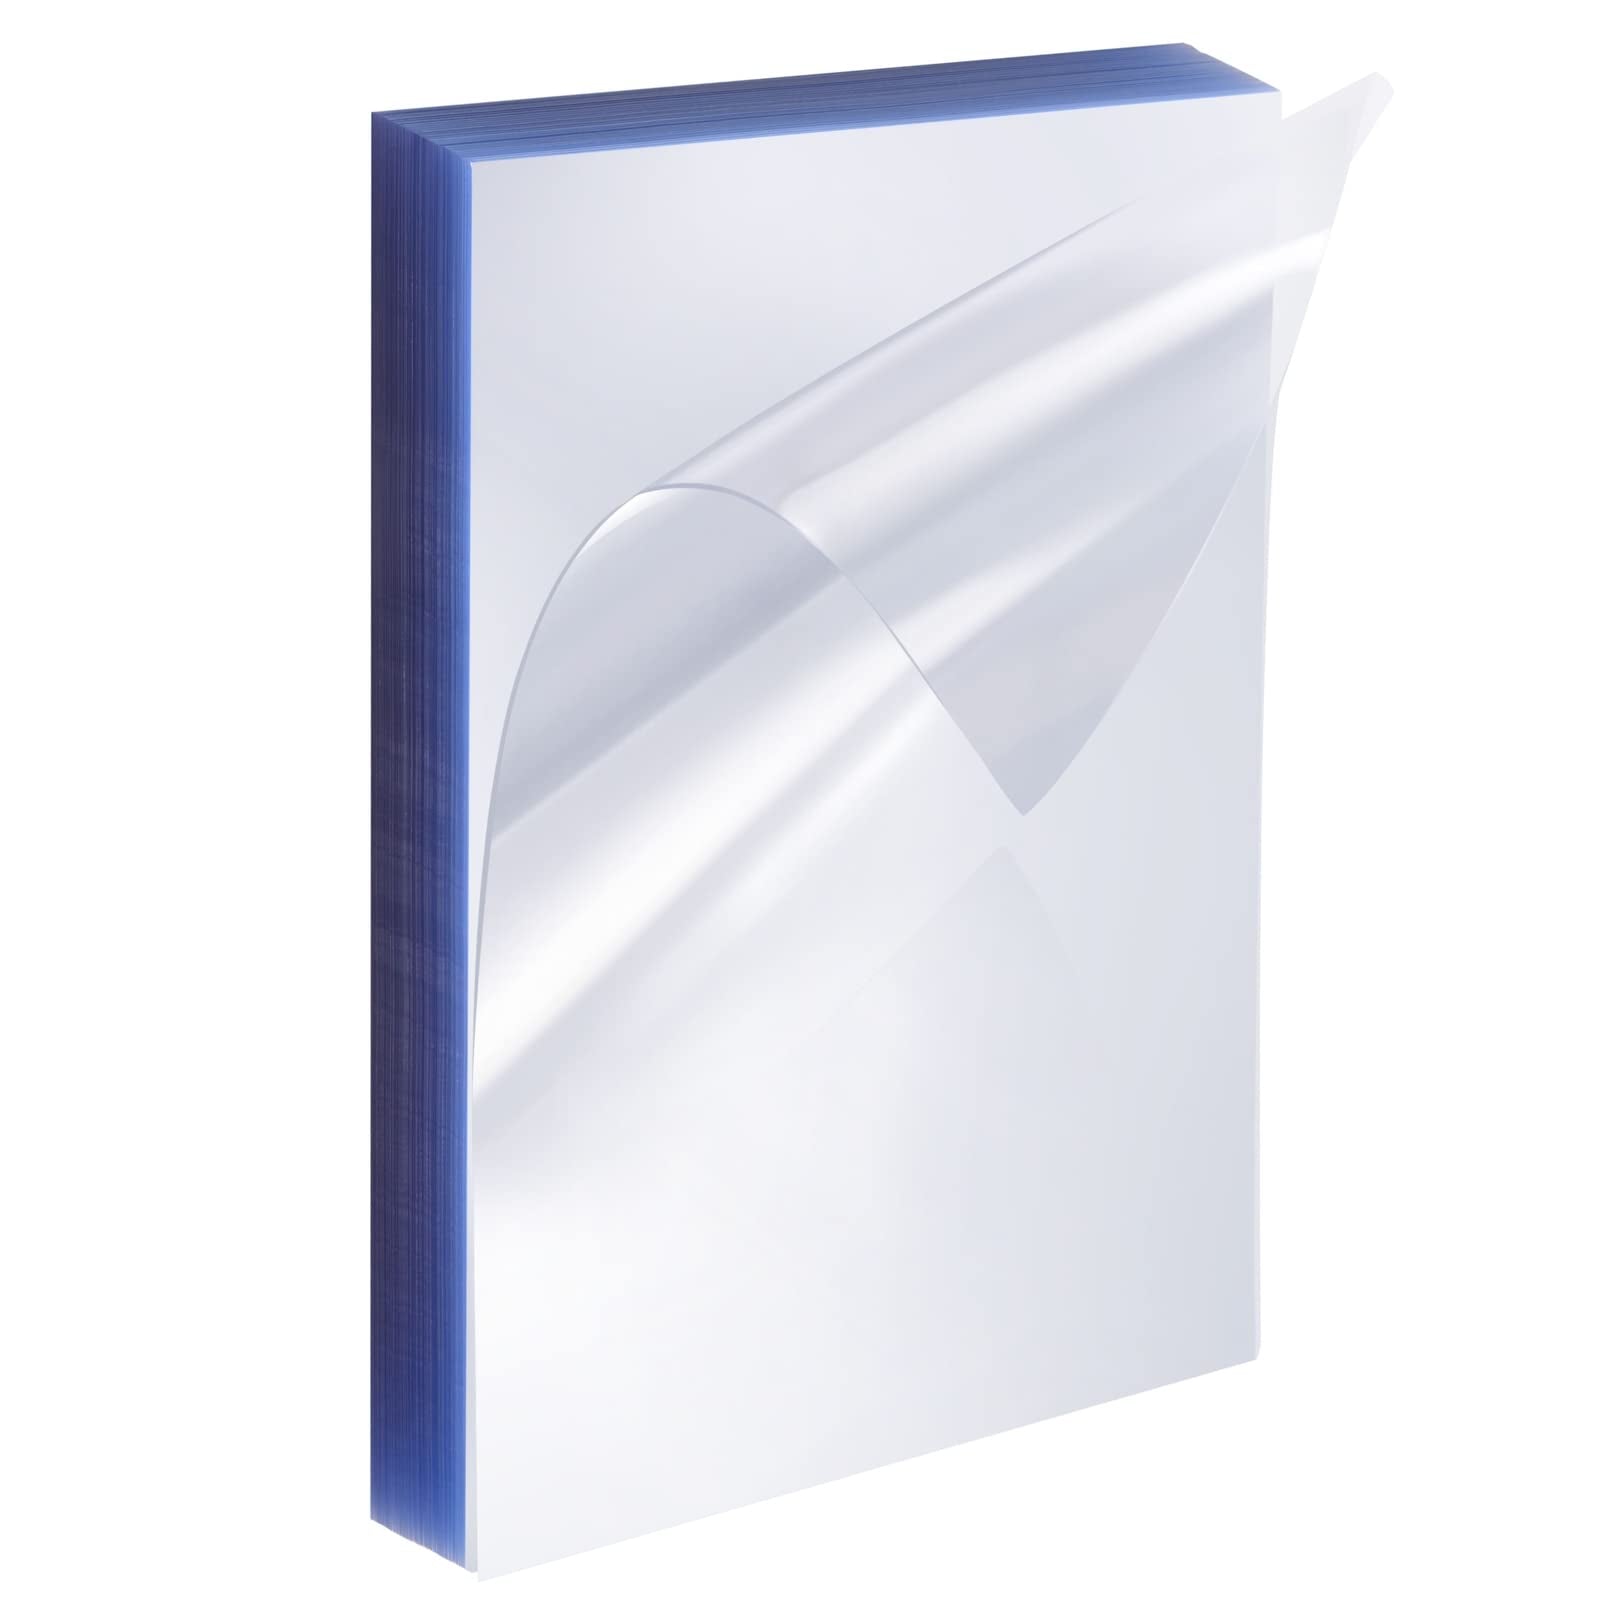 PVC Transparent Binding Cover A4 Size || شفيفة بلاستك حجم A4 